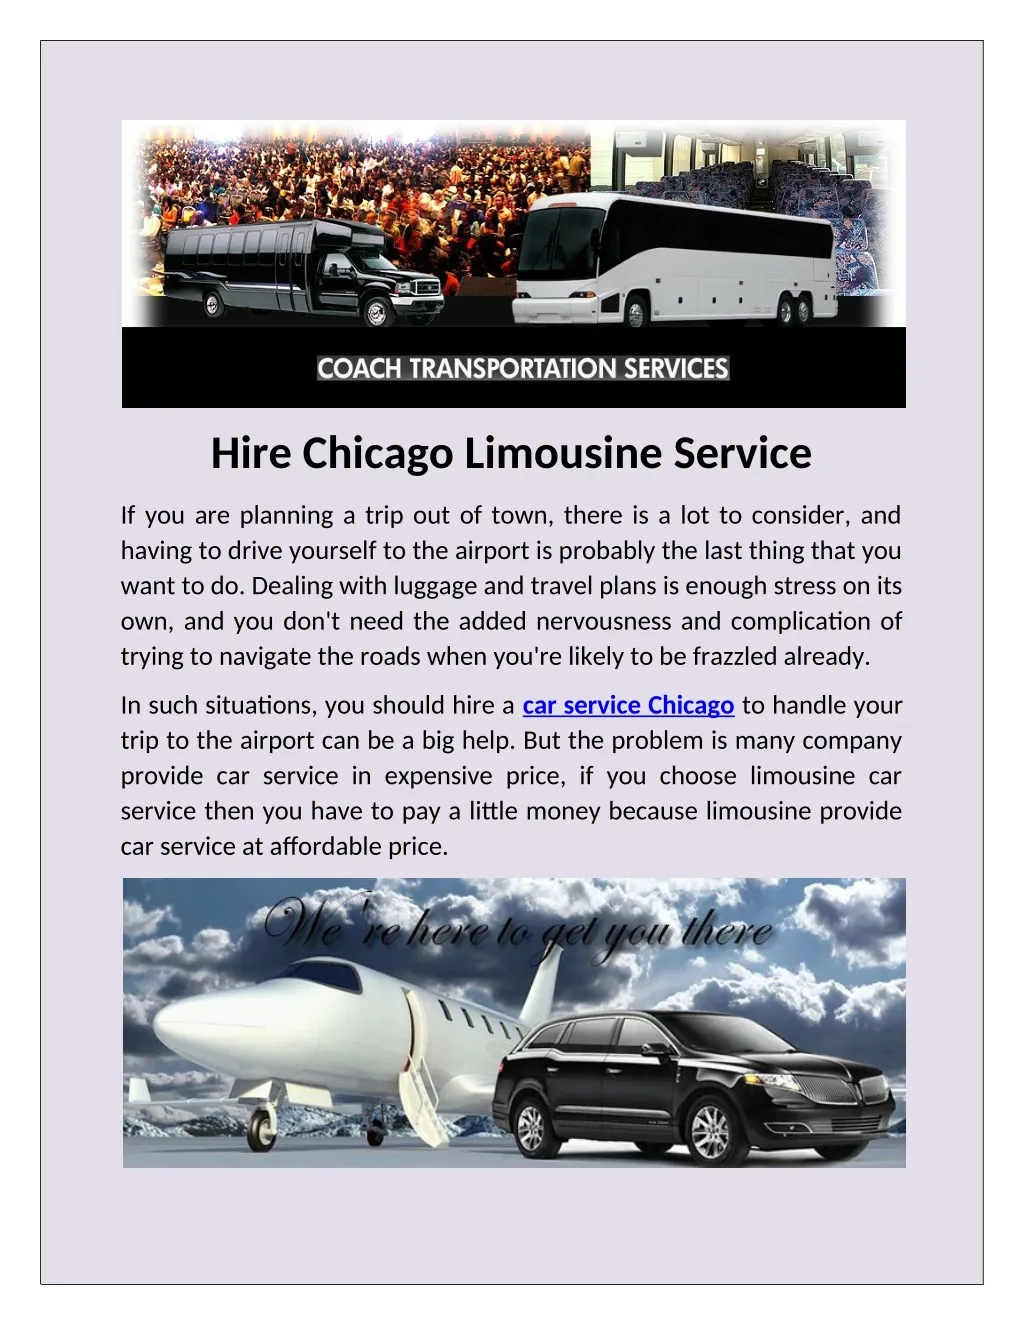 hire chicago limousine service n.